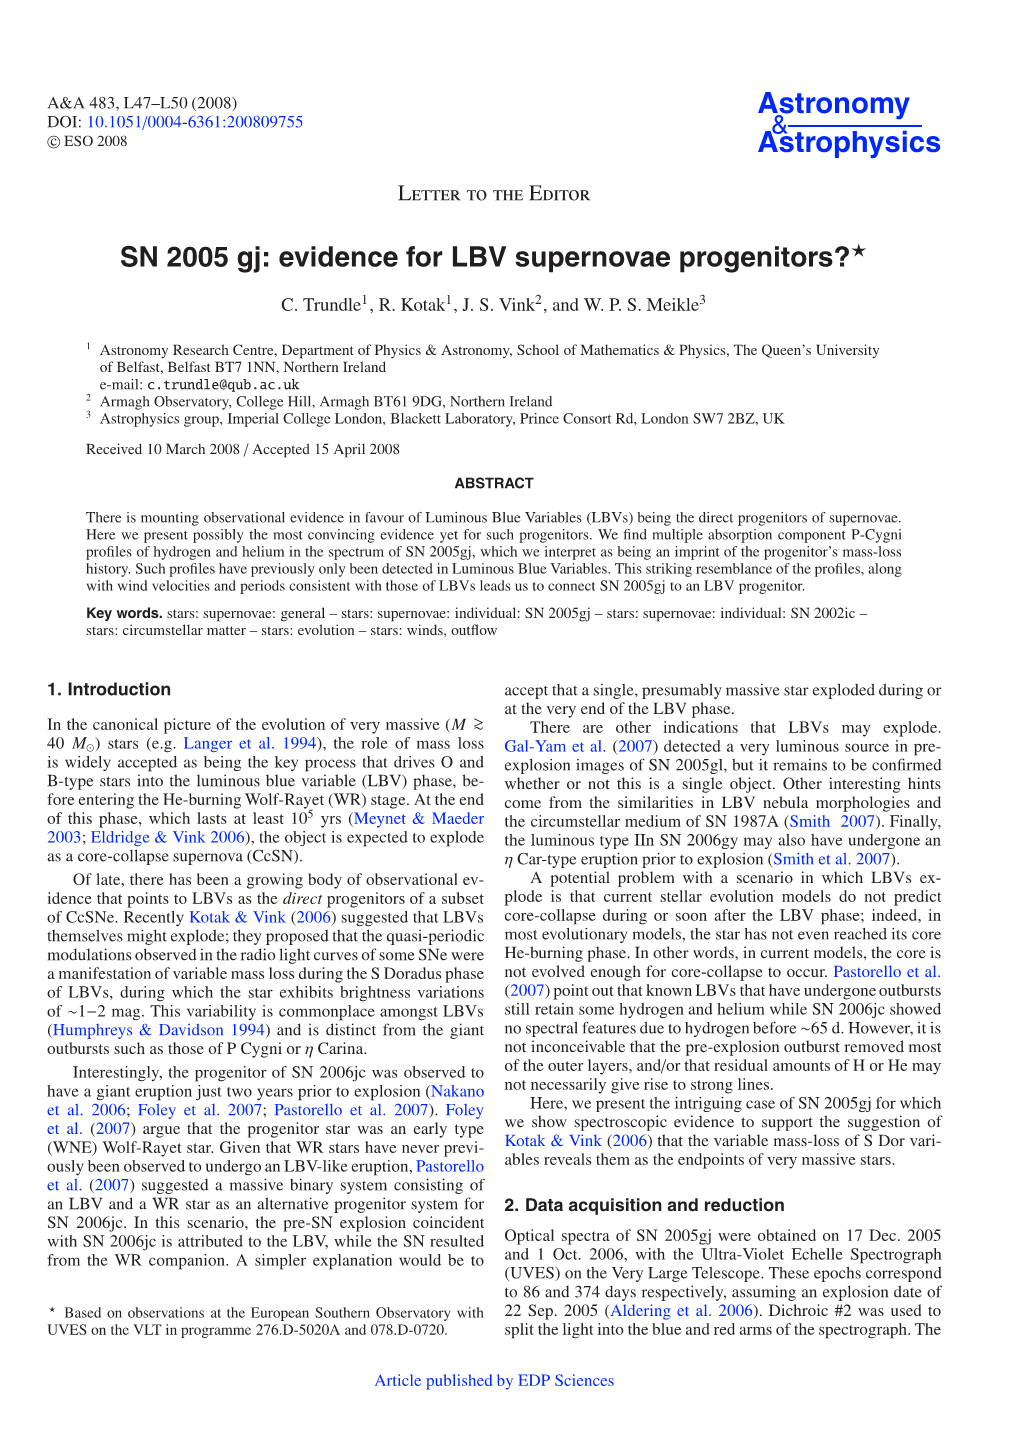 Evidence for LBV Supernovae Progenitors?